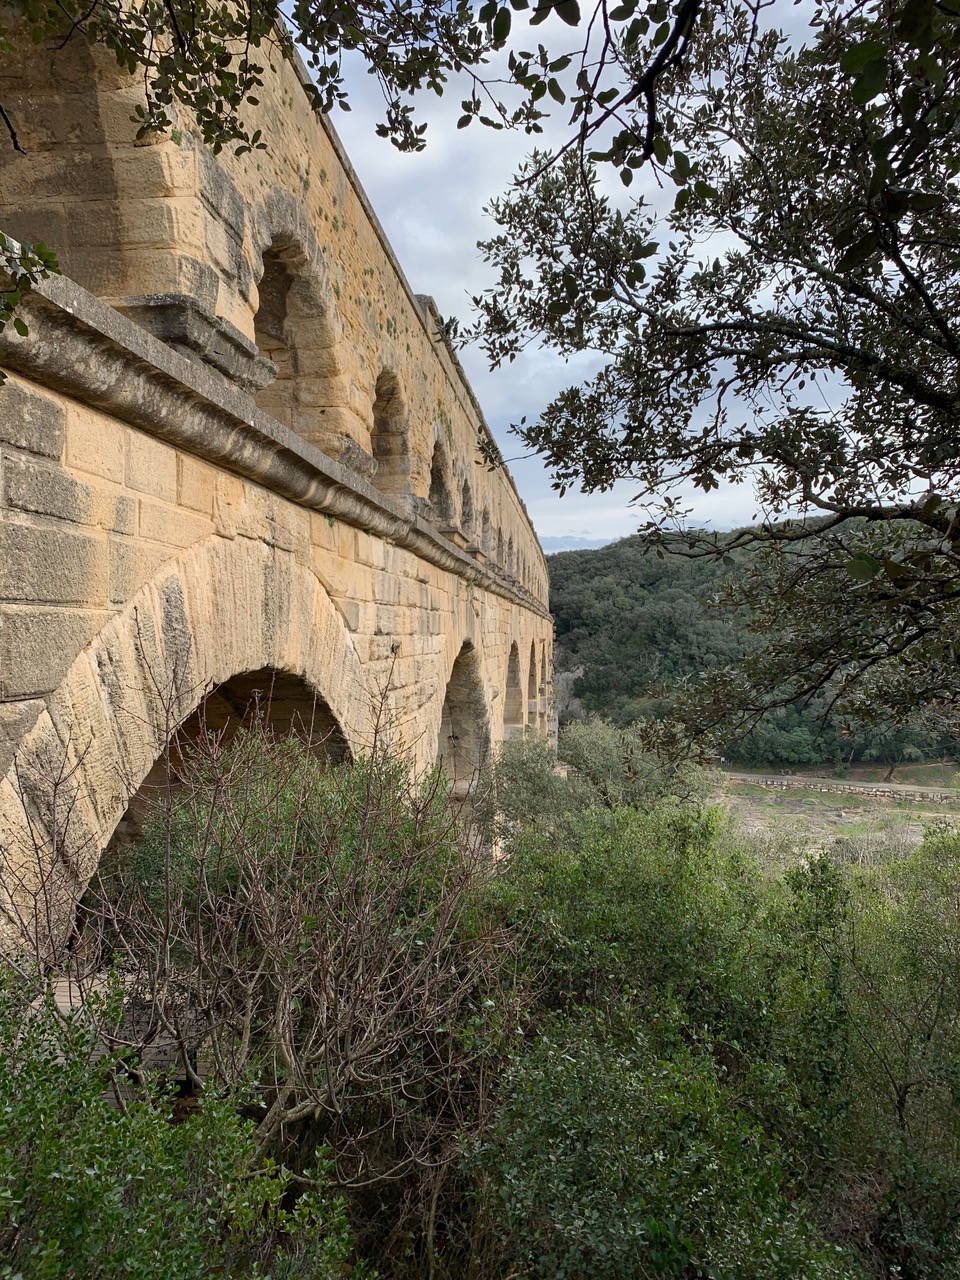 Pont du gard ruins of a giant Roman aquaduct